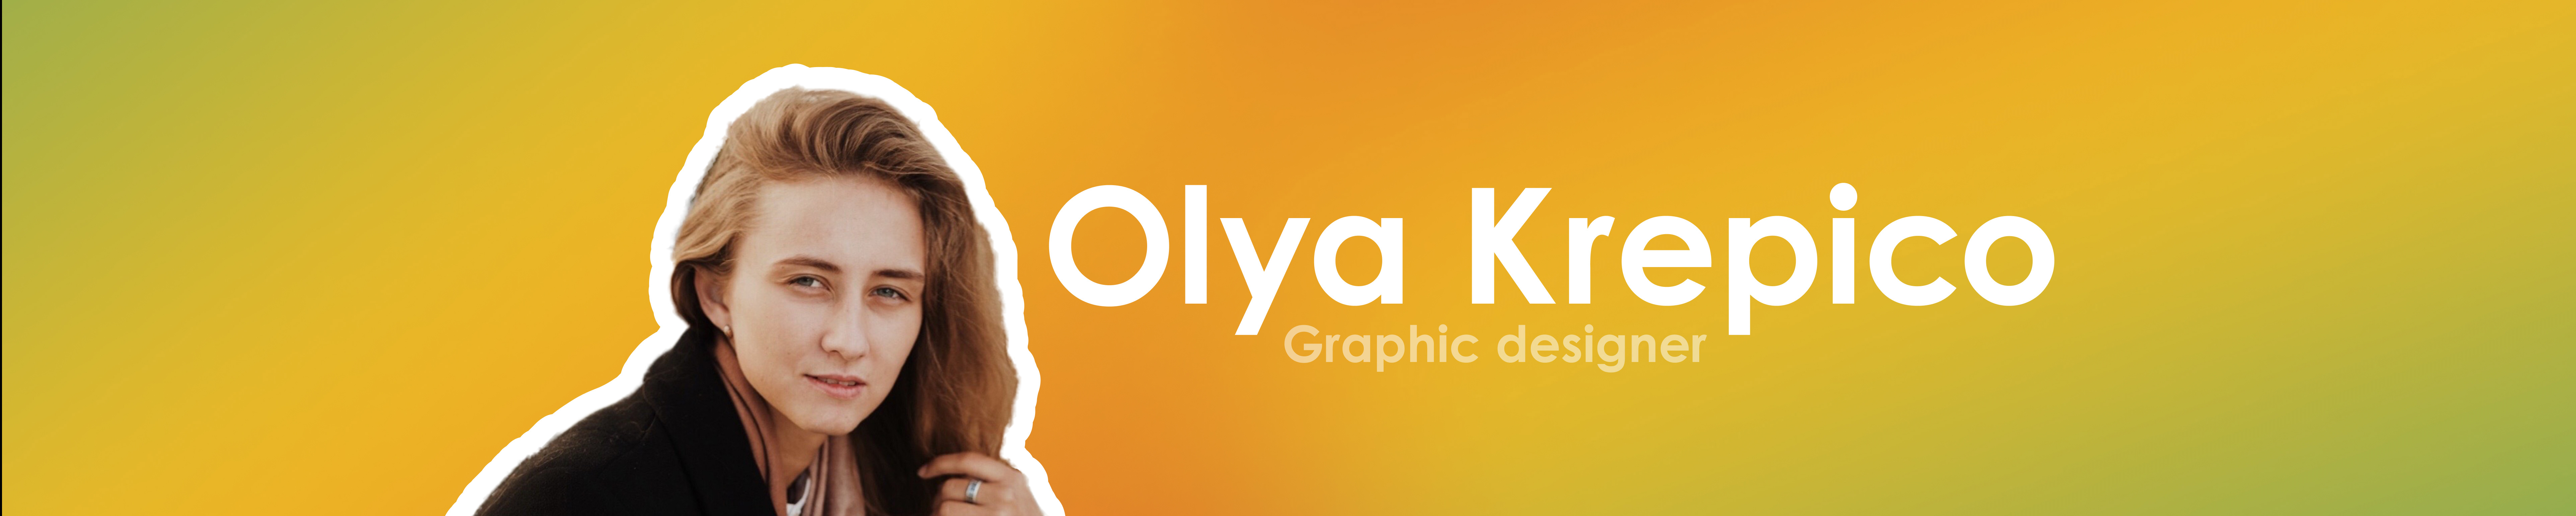 Banner de perfil de Olya Krepico